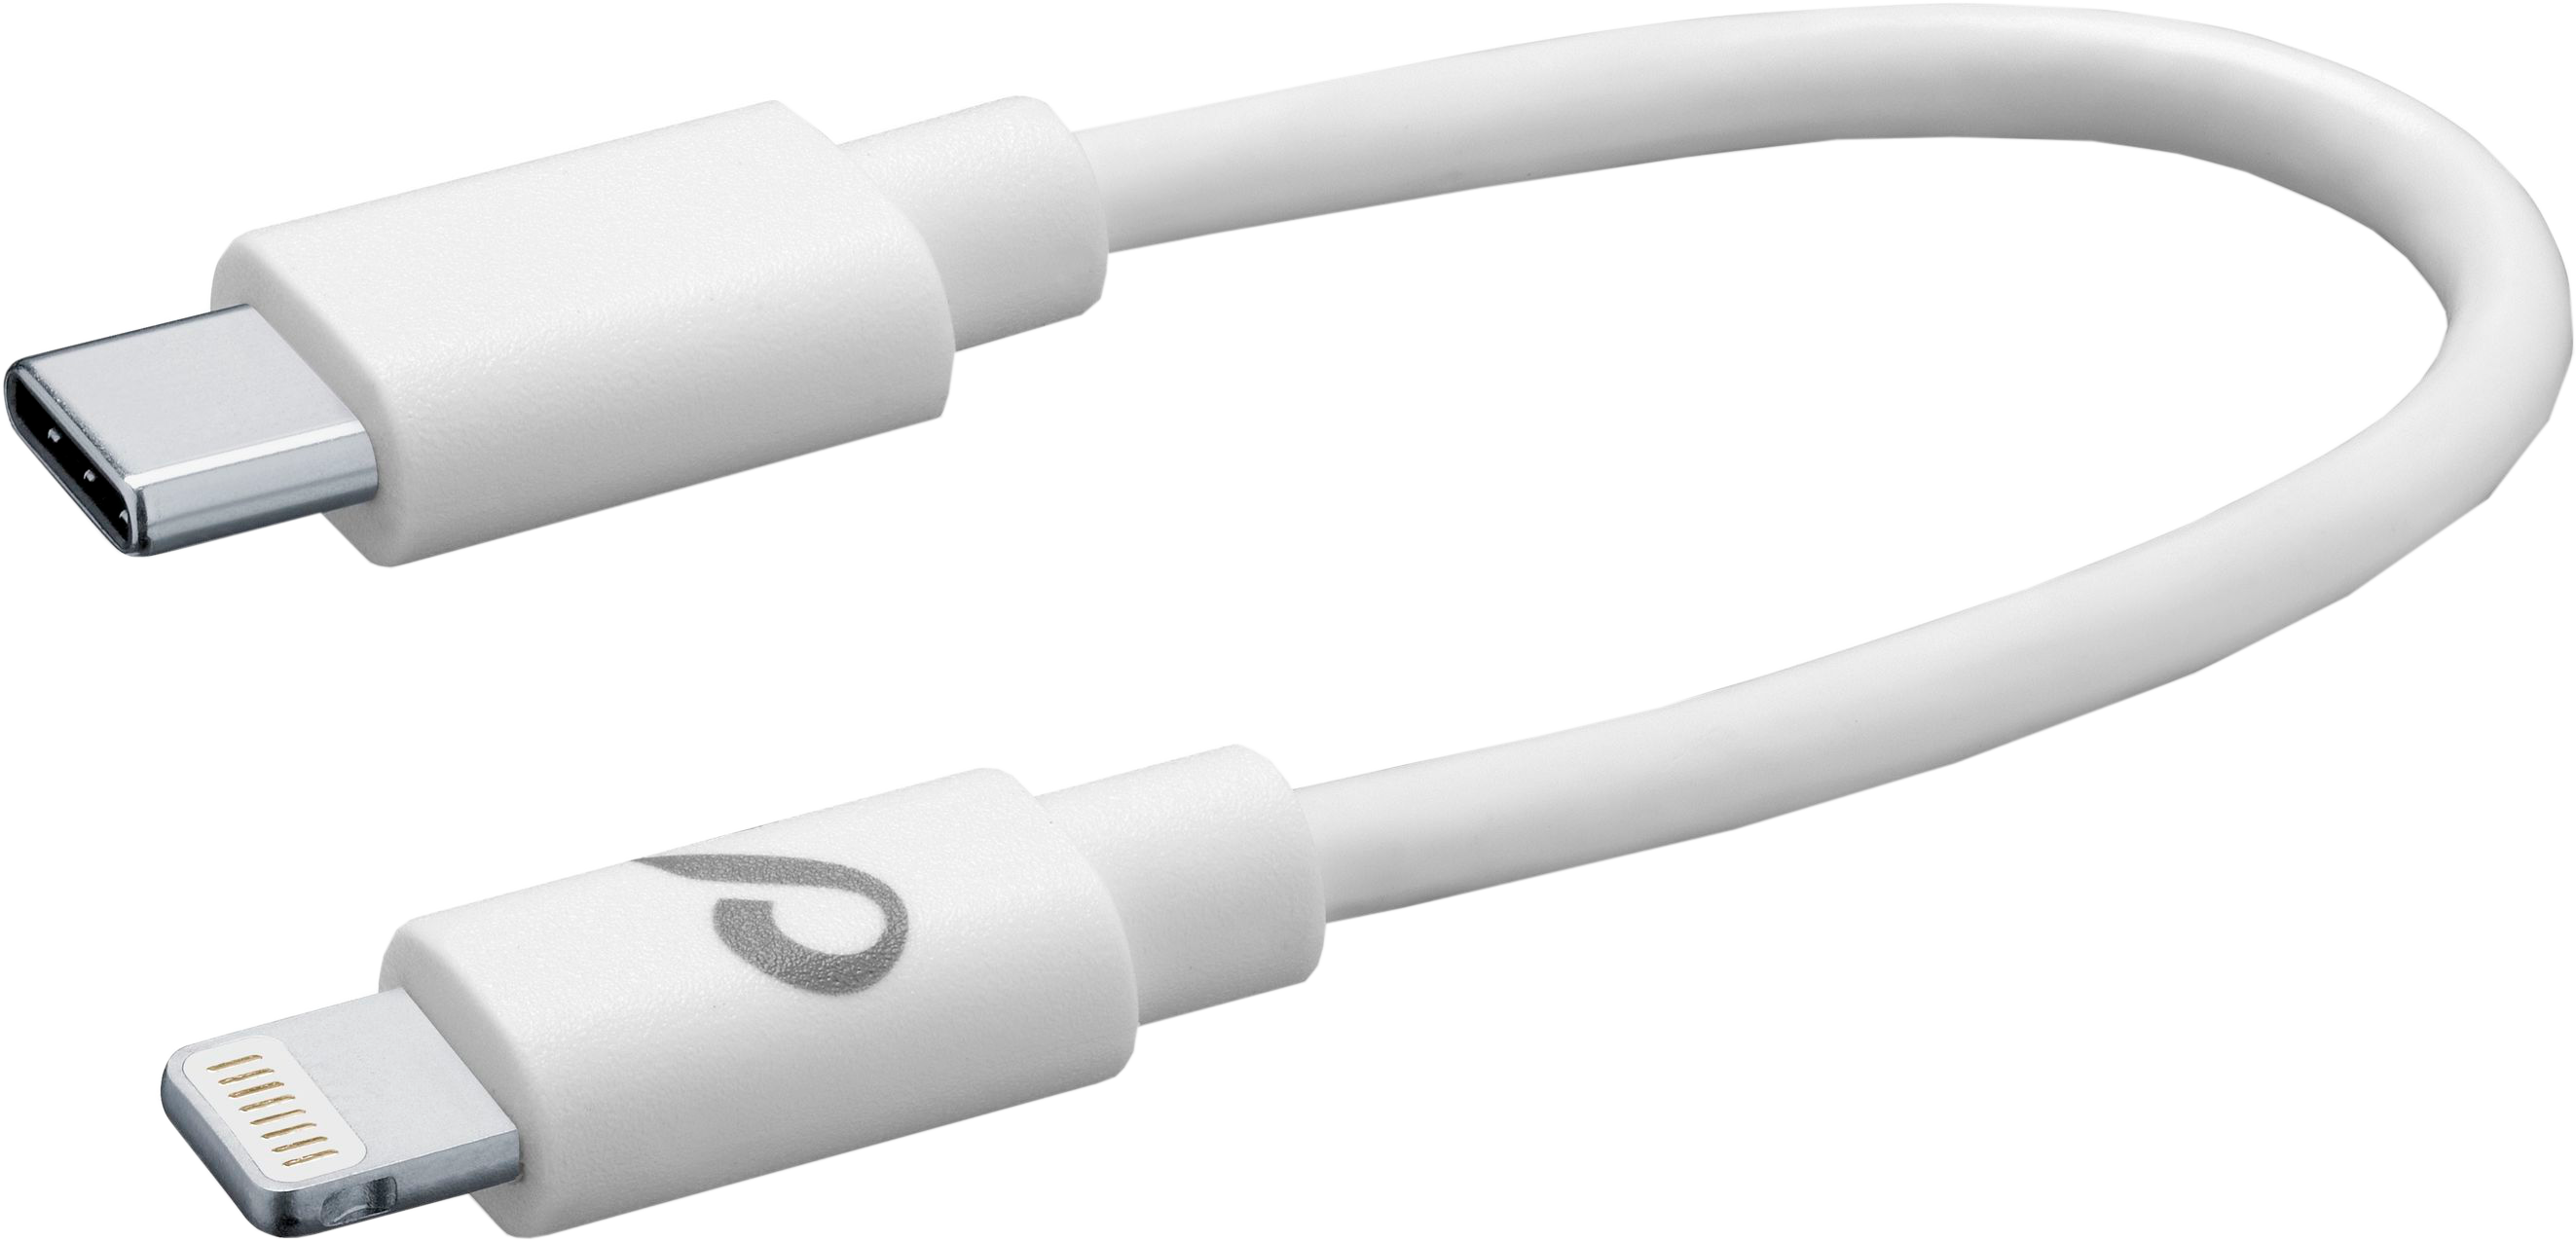 CELLULAR LINE USBDATAC2LMFI15CMW - Cavo USB-C (Bianco)